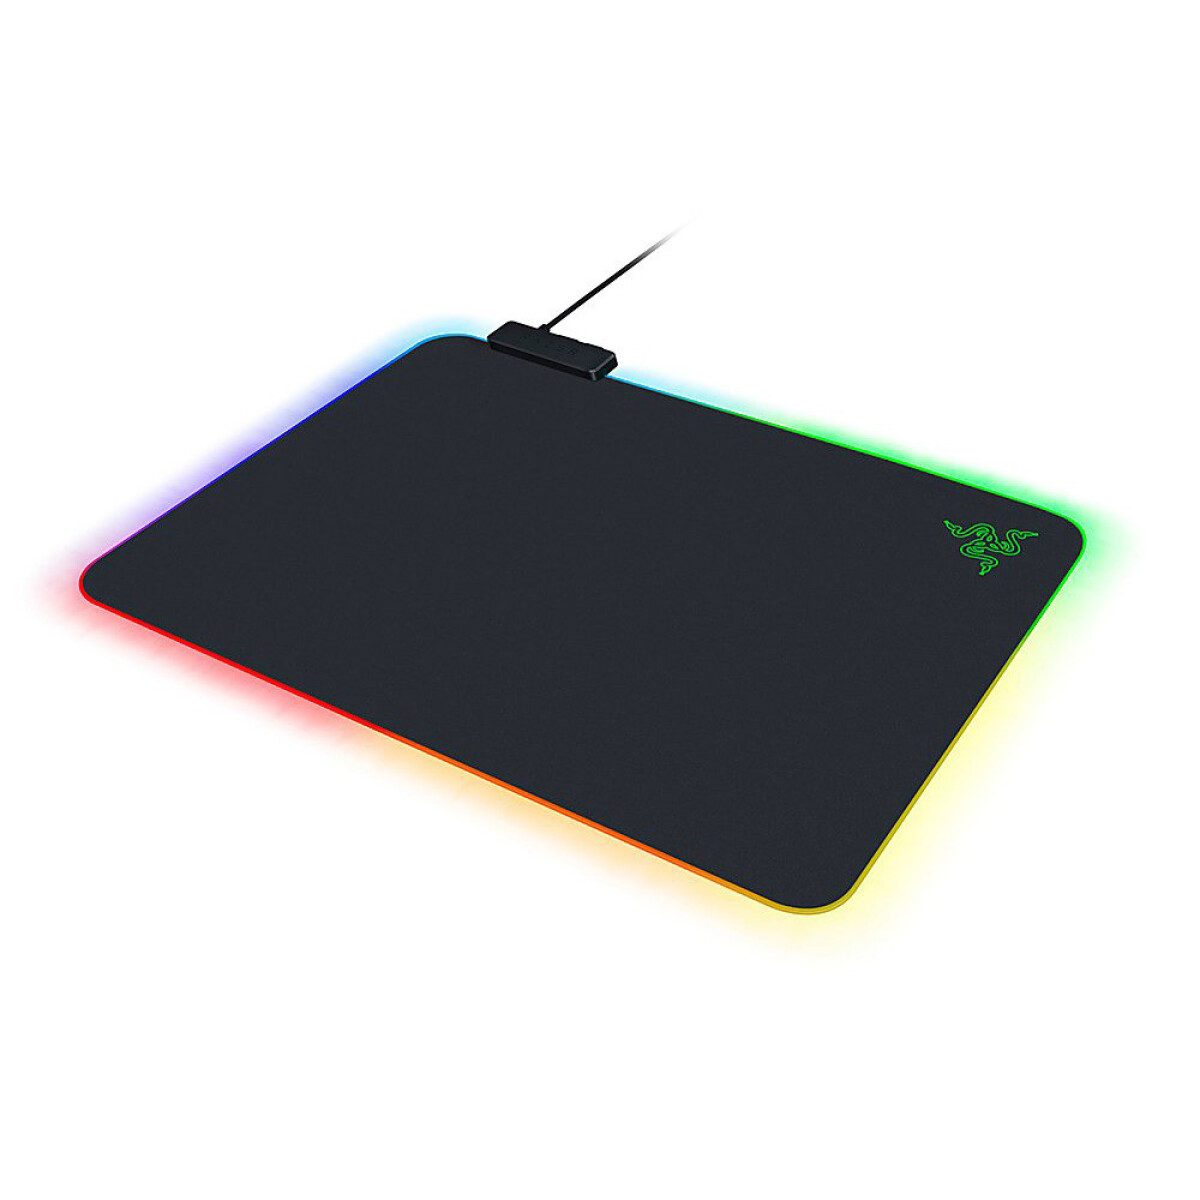 Mouse pad razer firefly v2 iluminación rgb | 355mm x 255mm Black